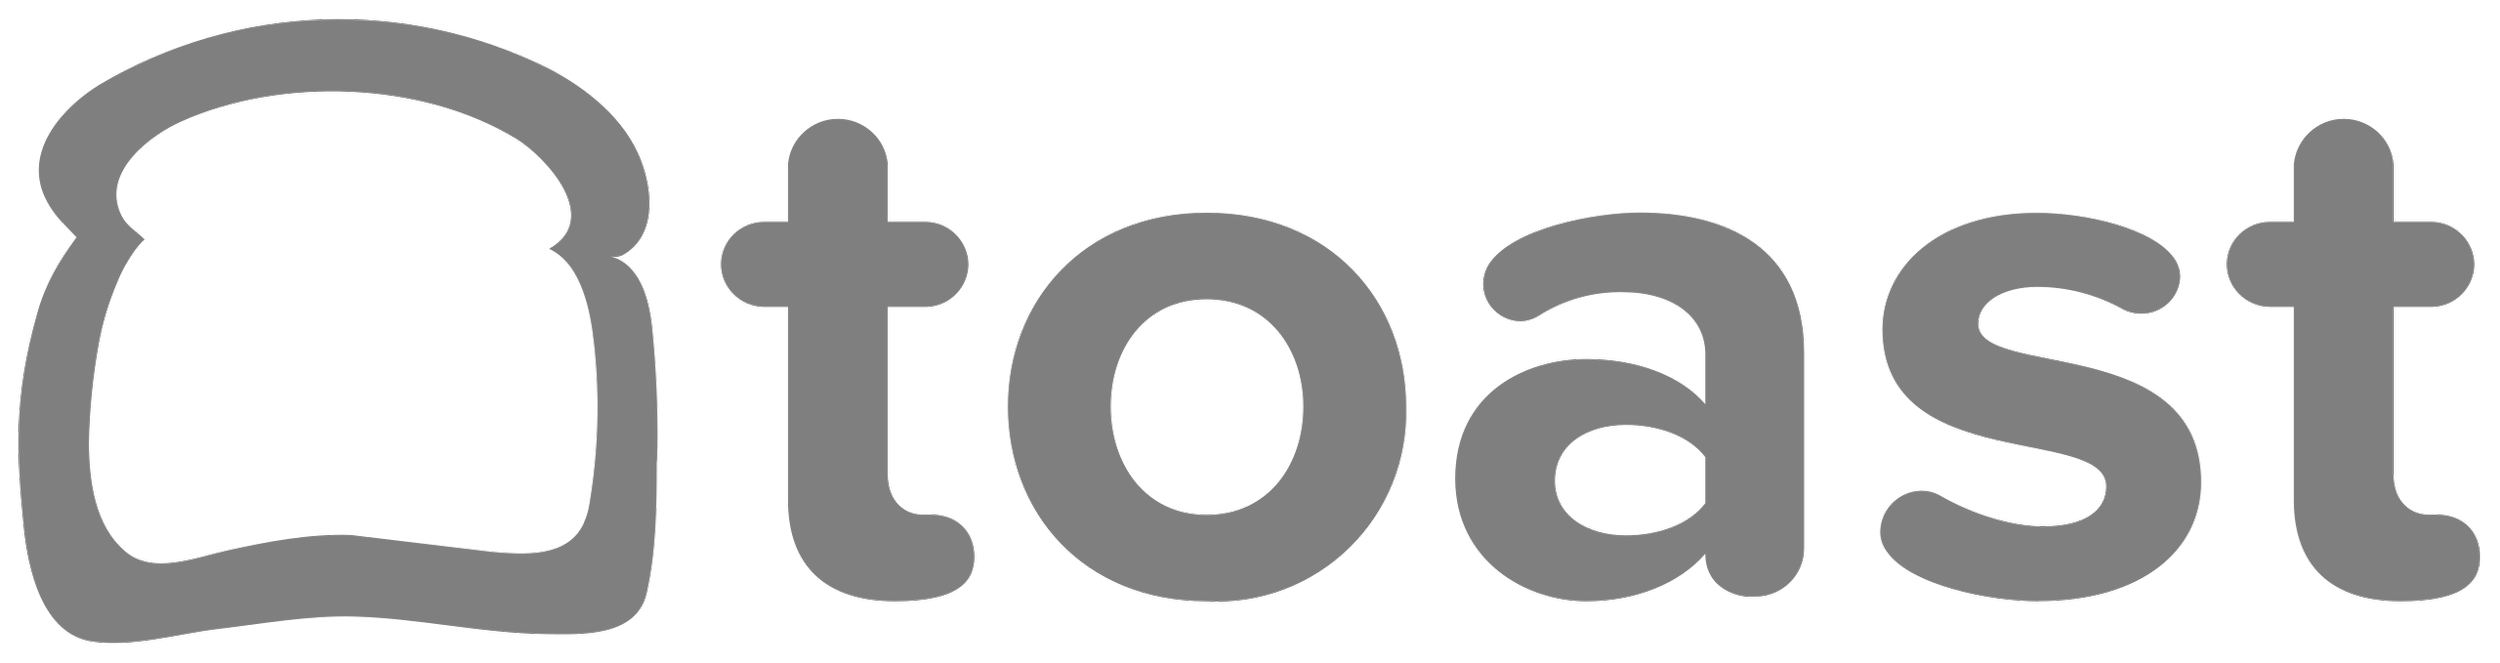 Toast_logo.png